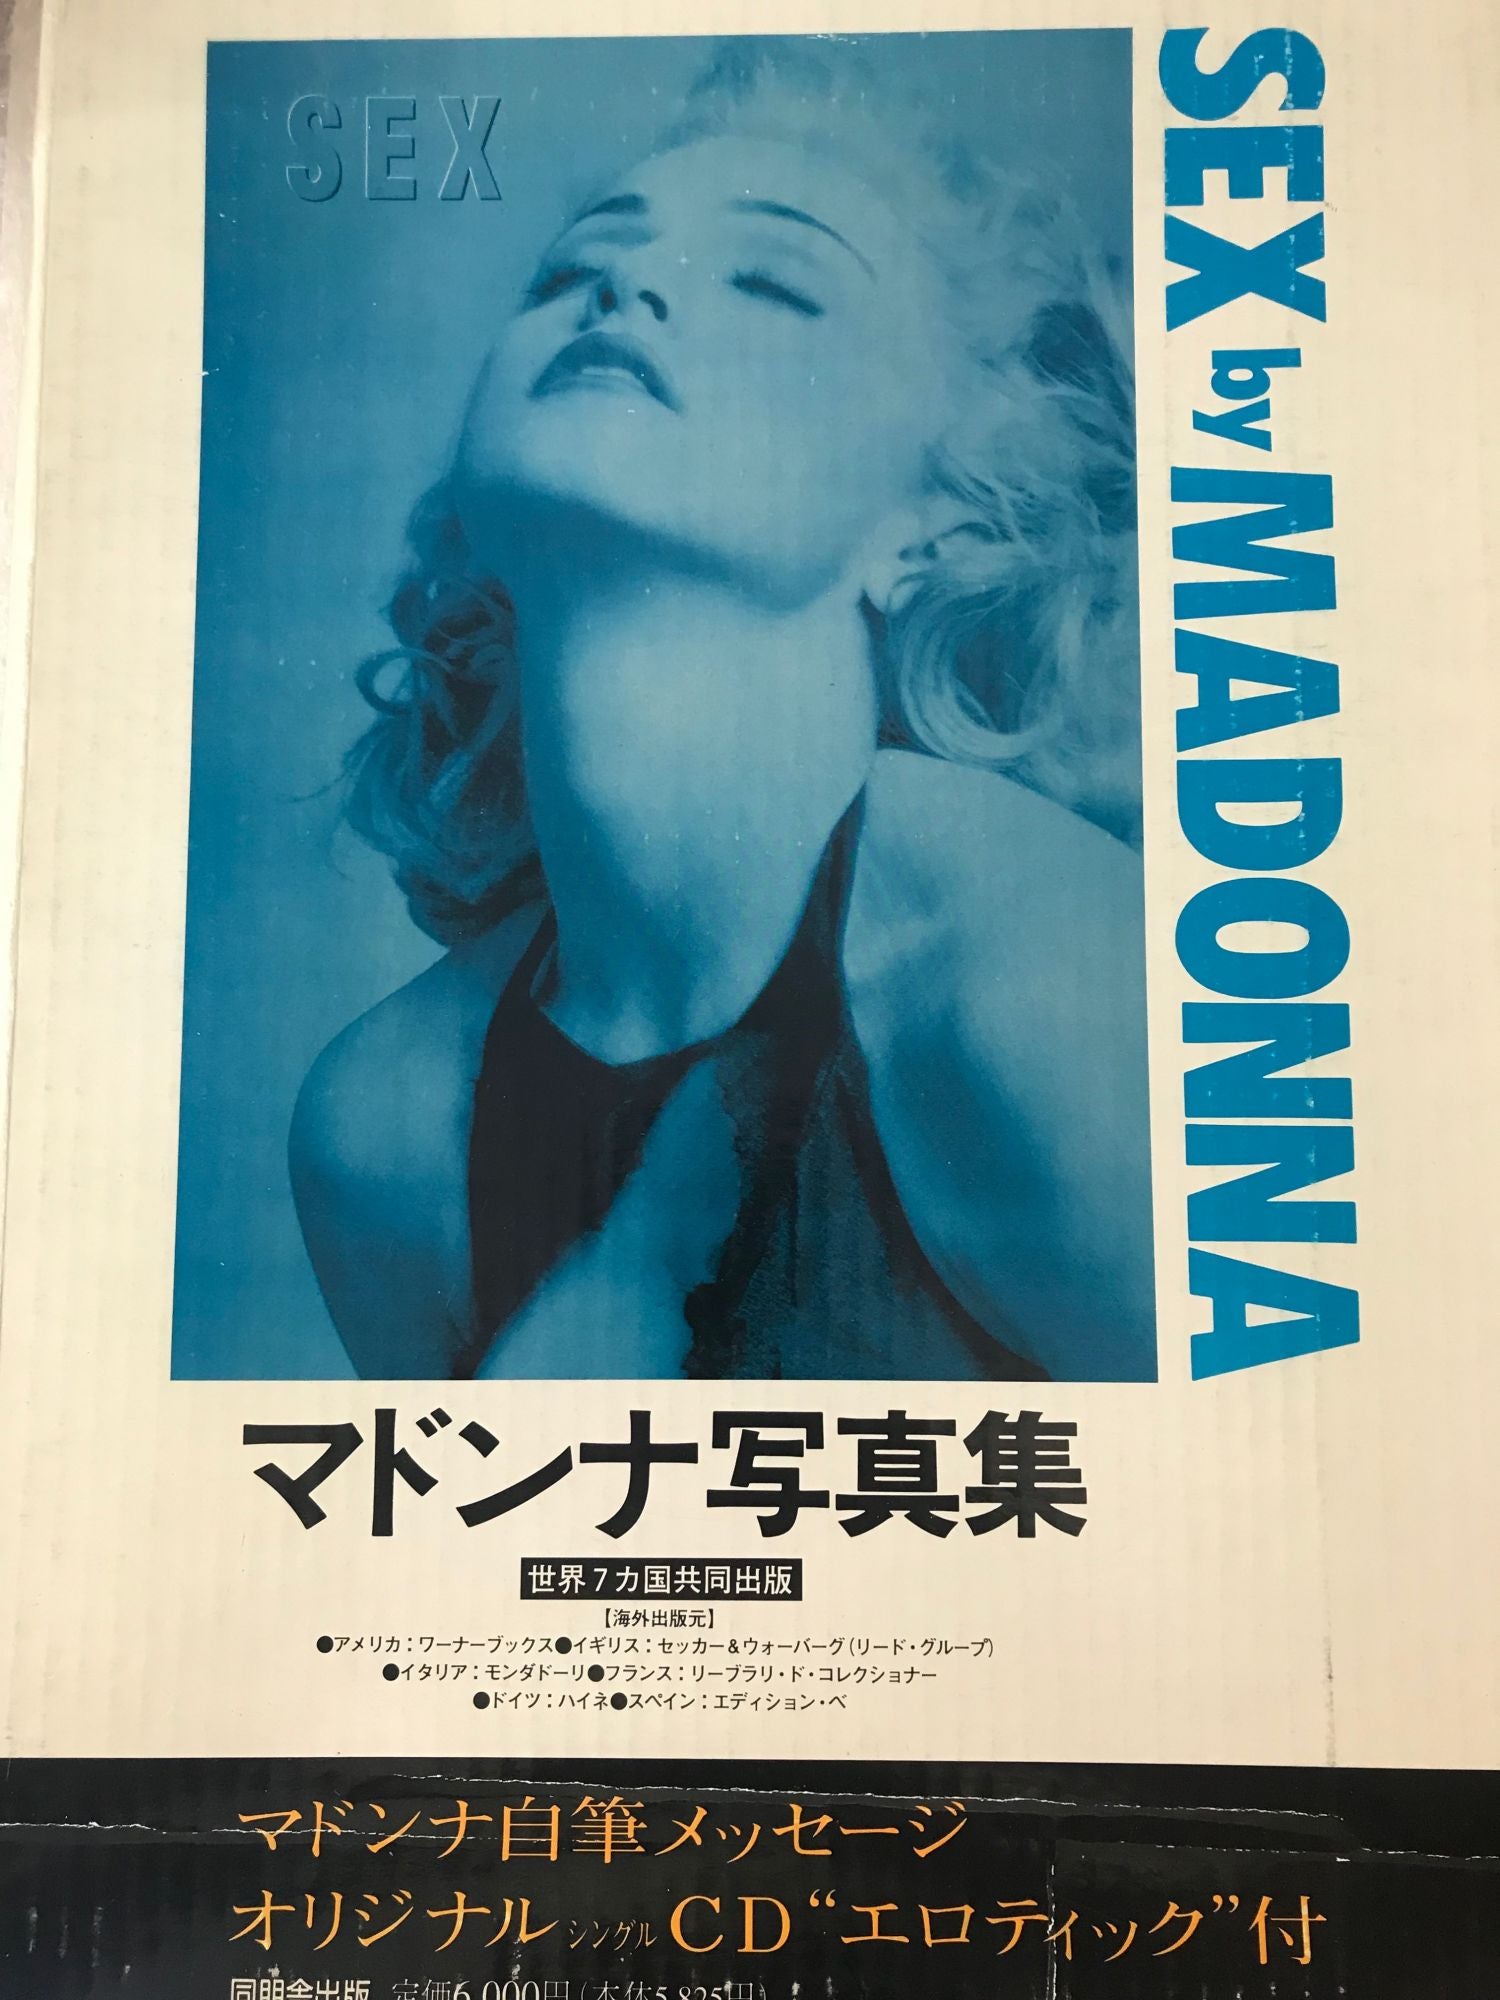 SEX | Madonna | Japanese Edition